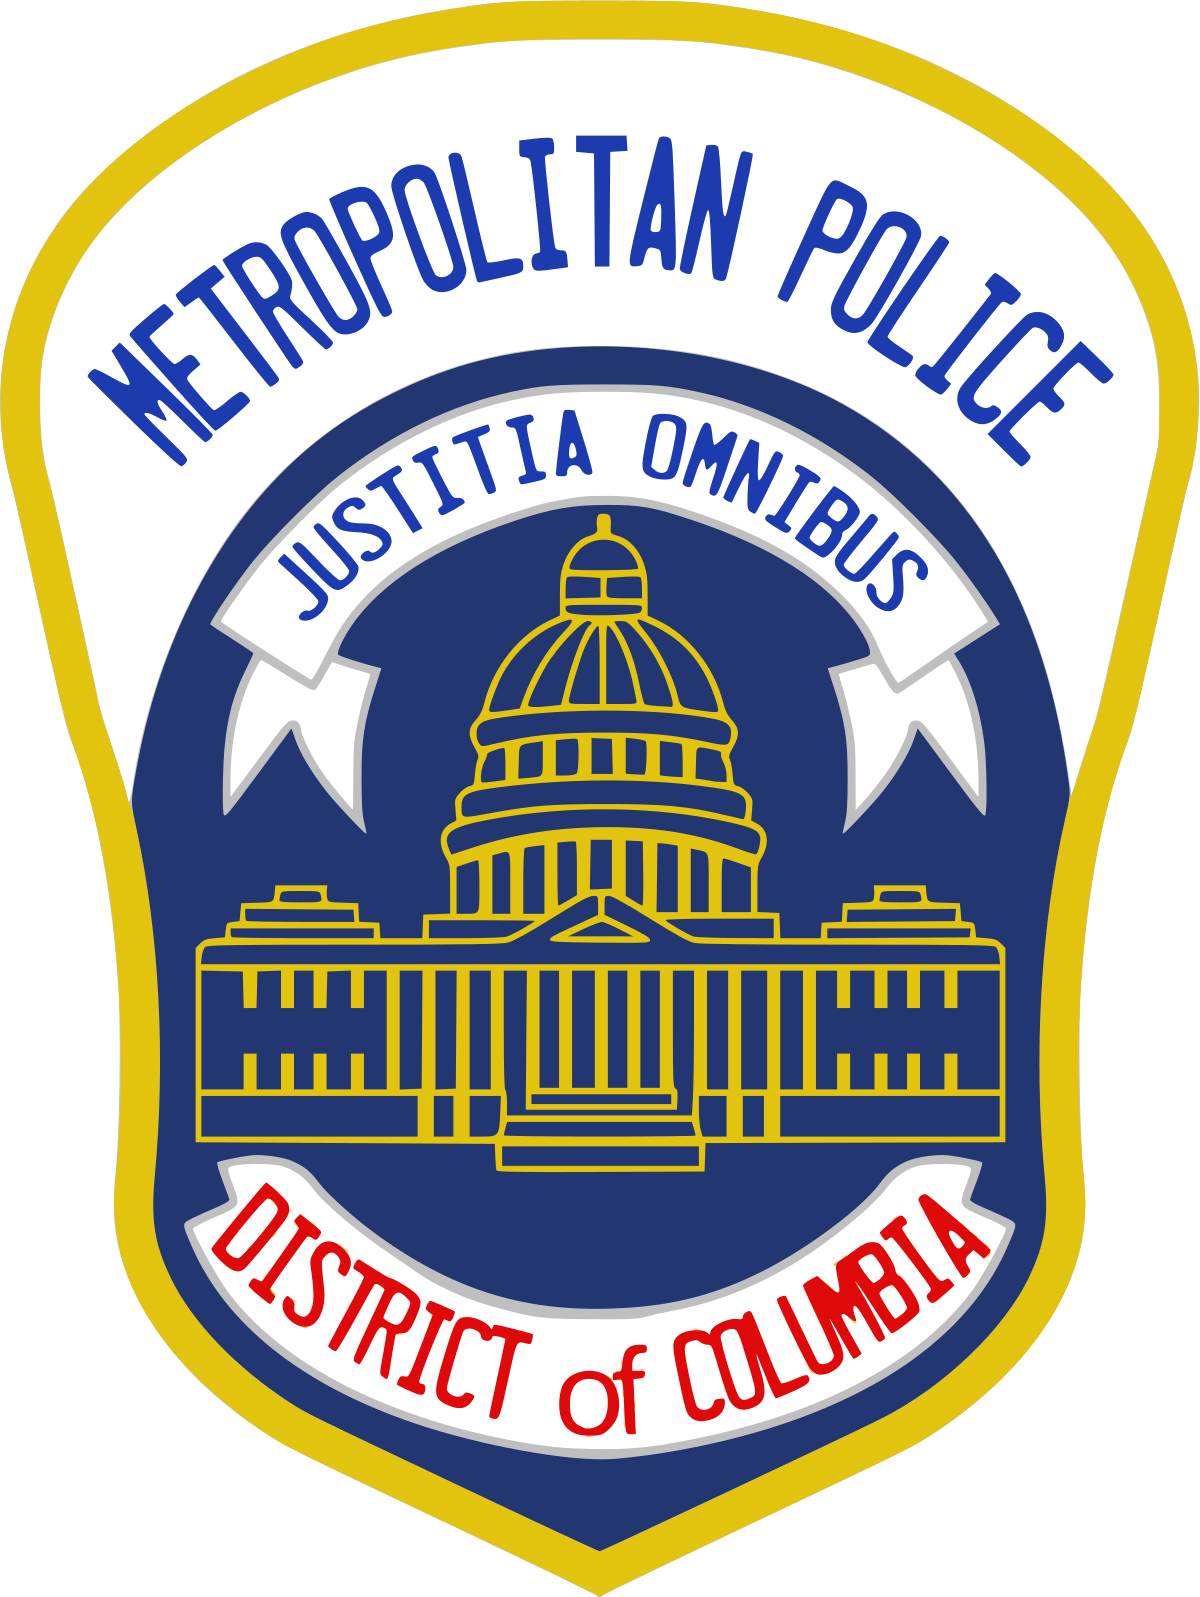 District of Columbia Logo - Metropolitan Police Department of the District of Columbia